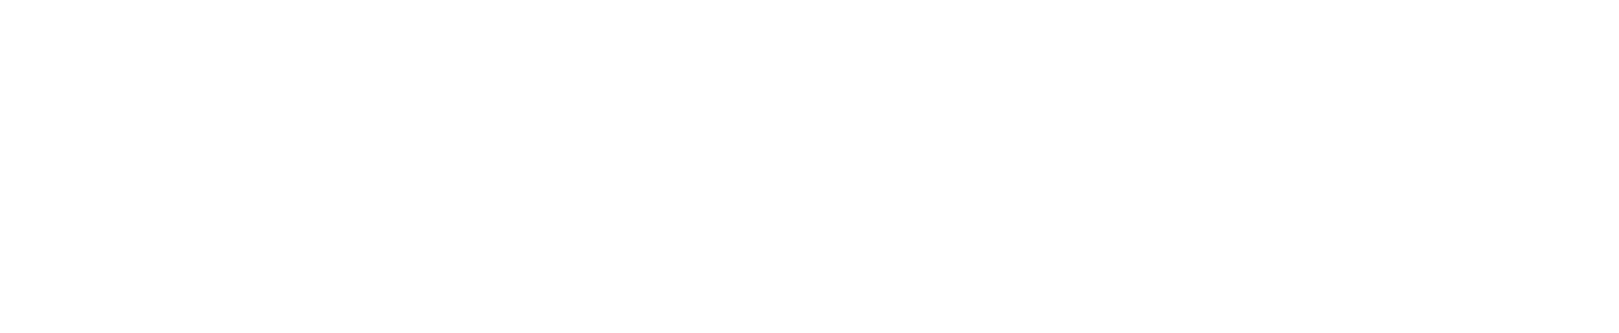 Energy Transfer Partners
 logo grand pour les fonds sombres (PNG transparent)